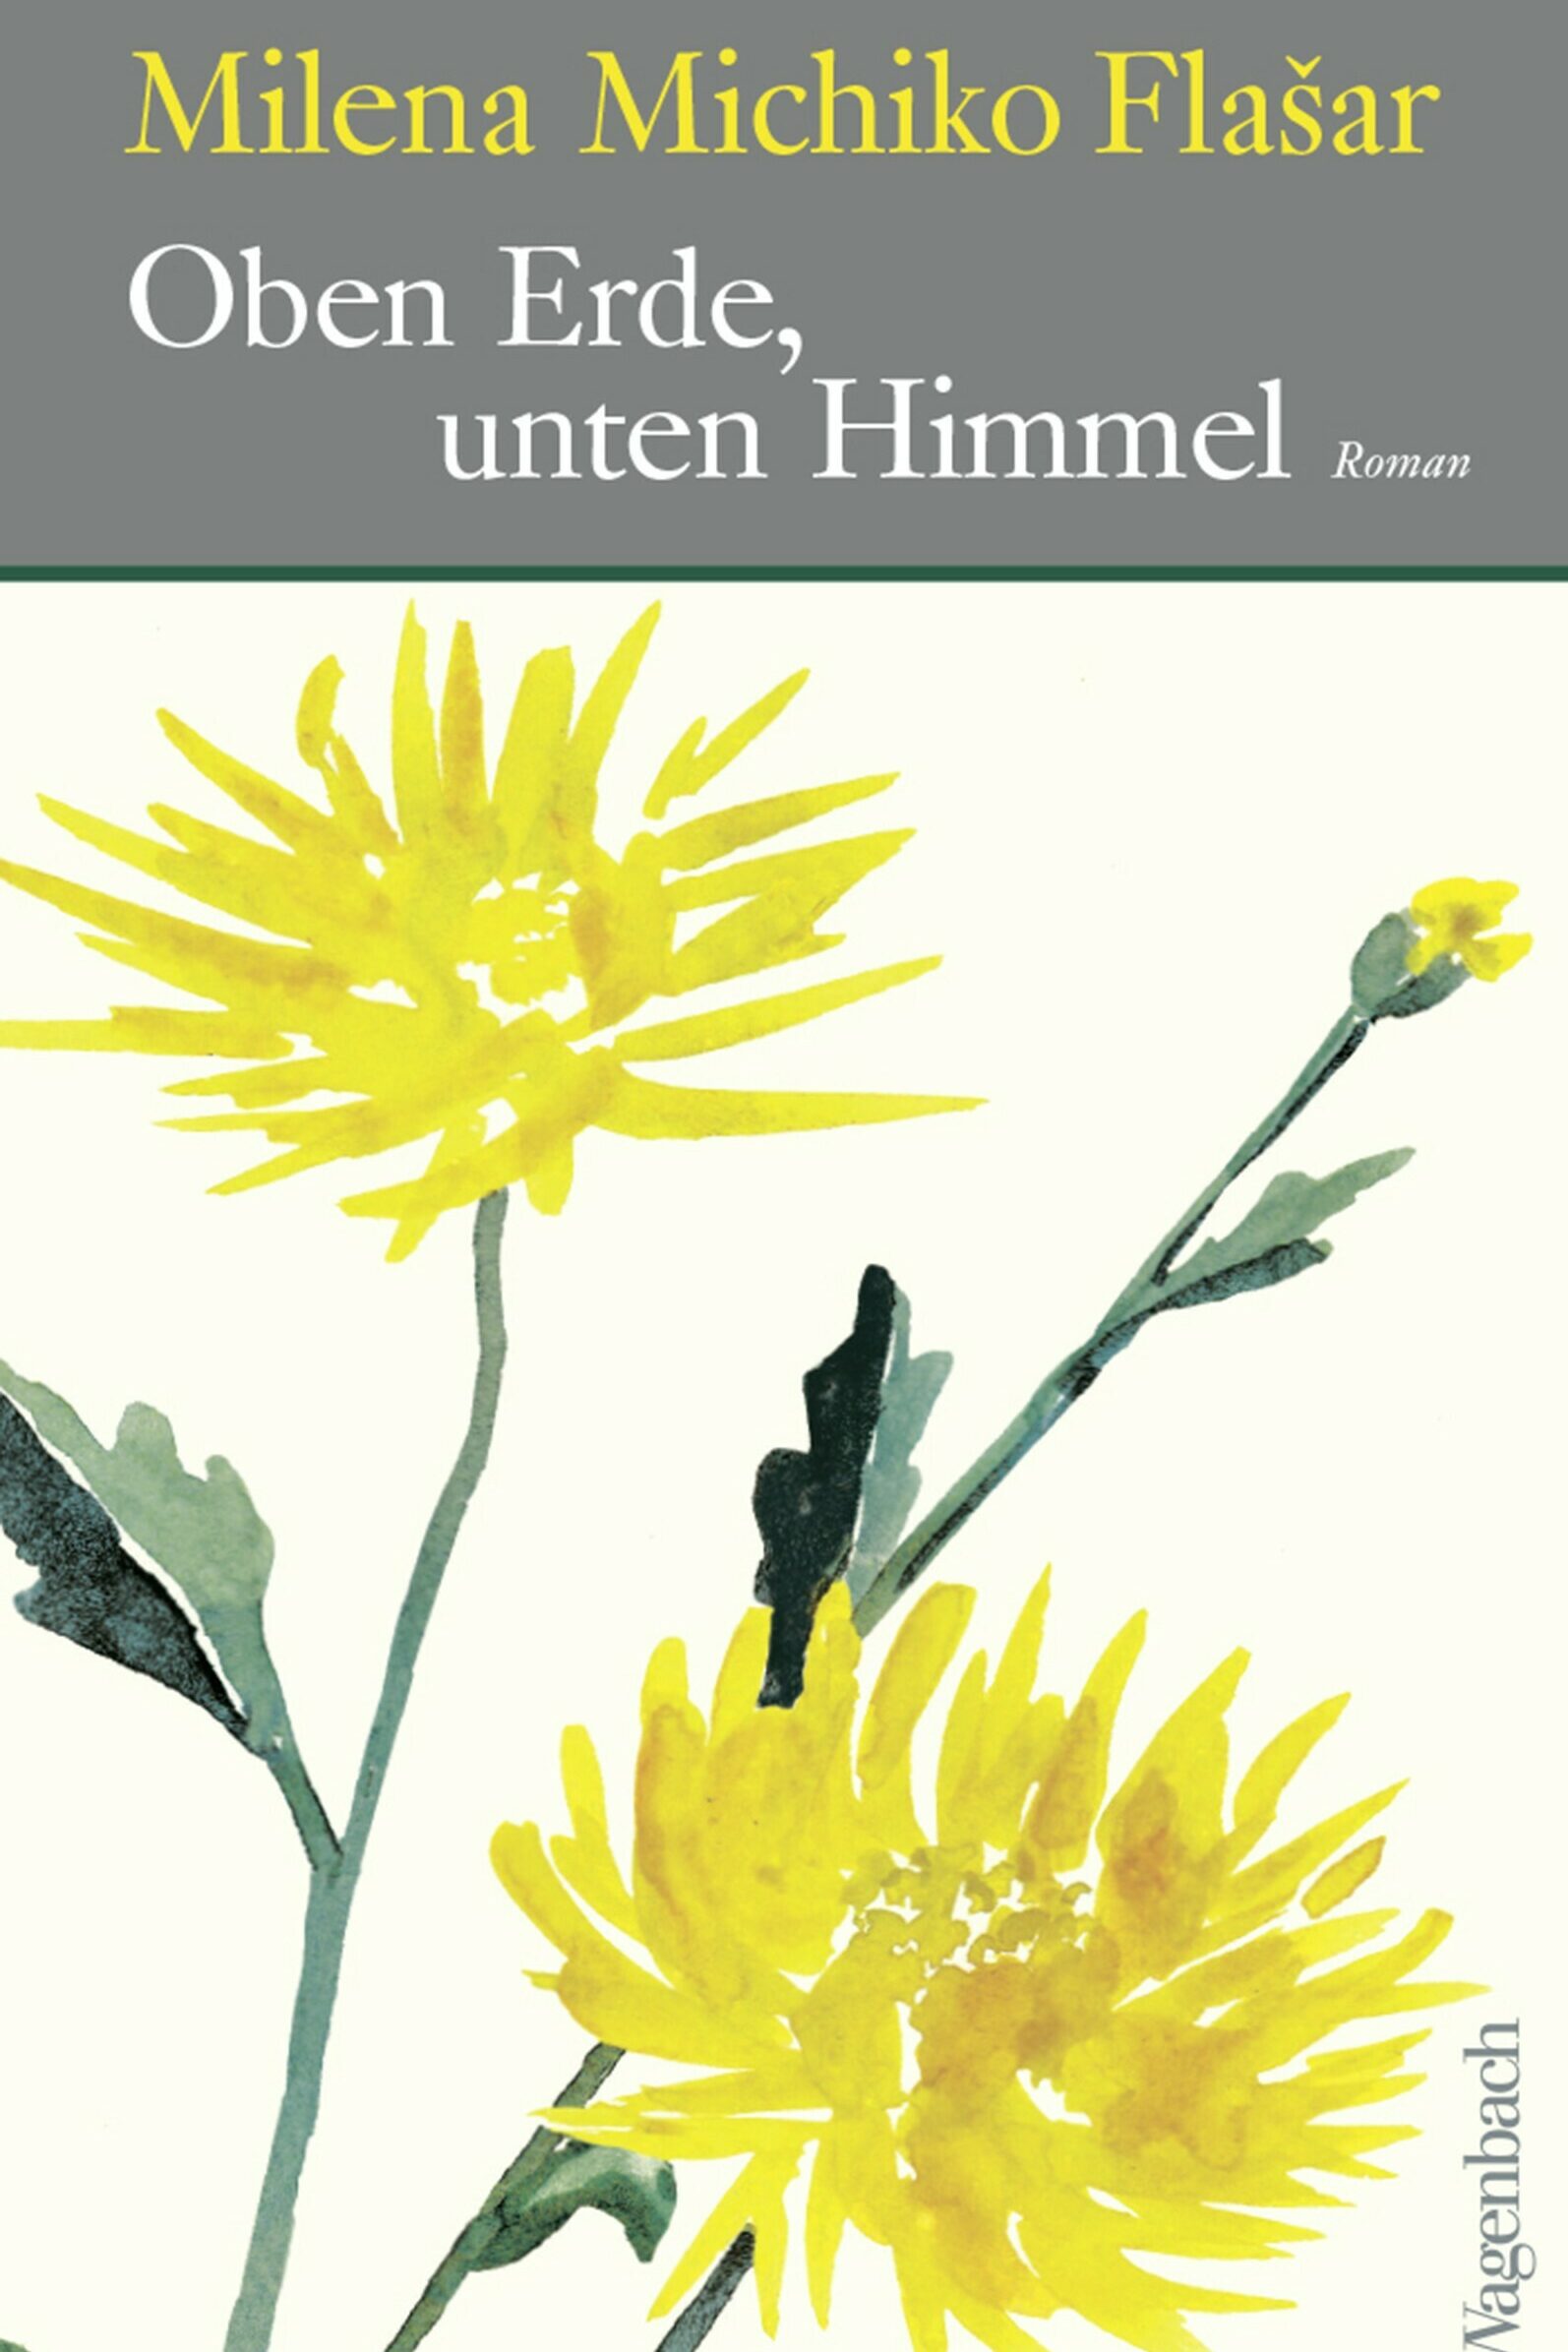 Oben Erde, unten Himmel, Literatur, Roman, Milena Michiko Flašar, Wagenbach Verlag